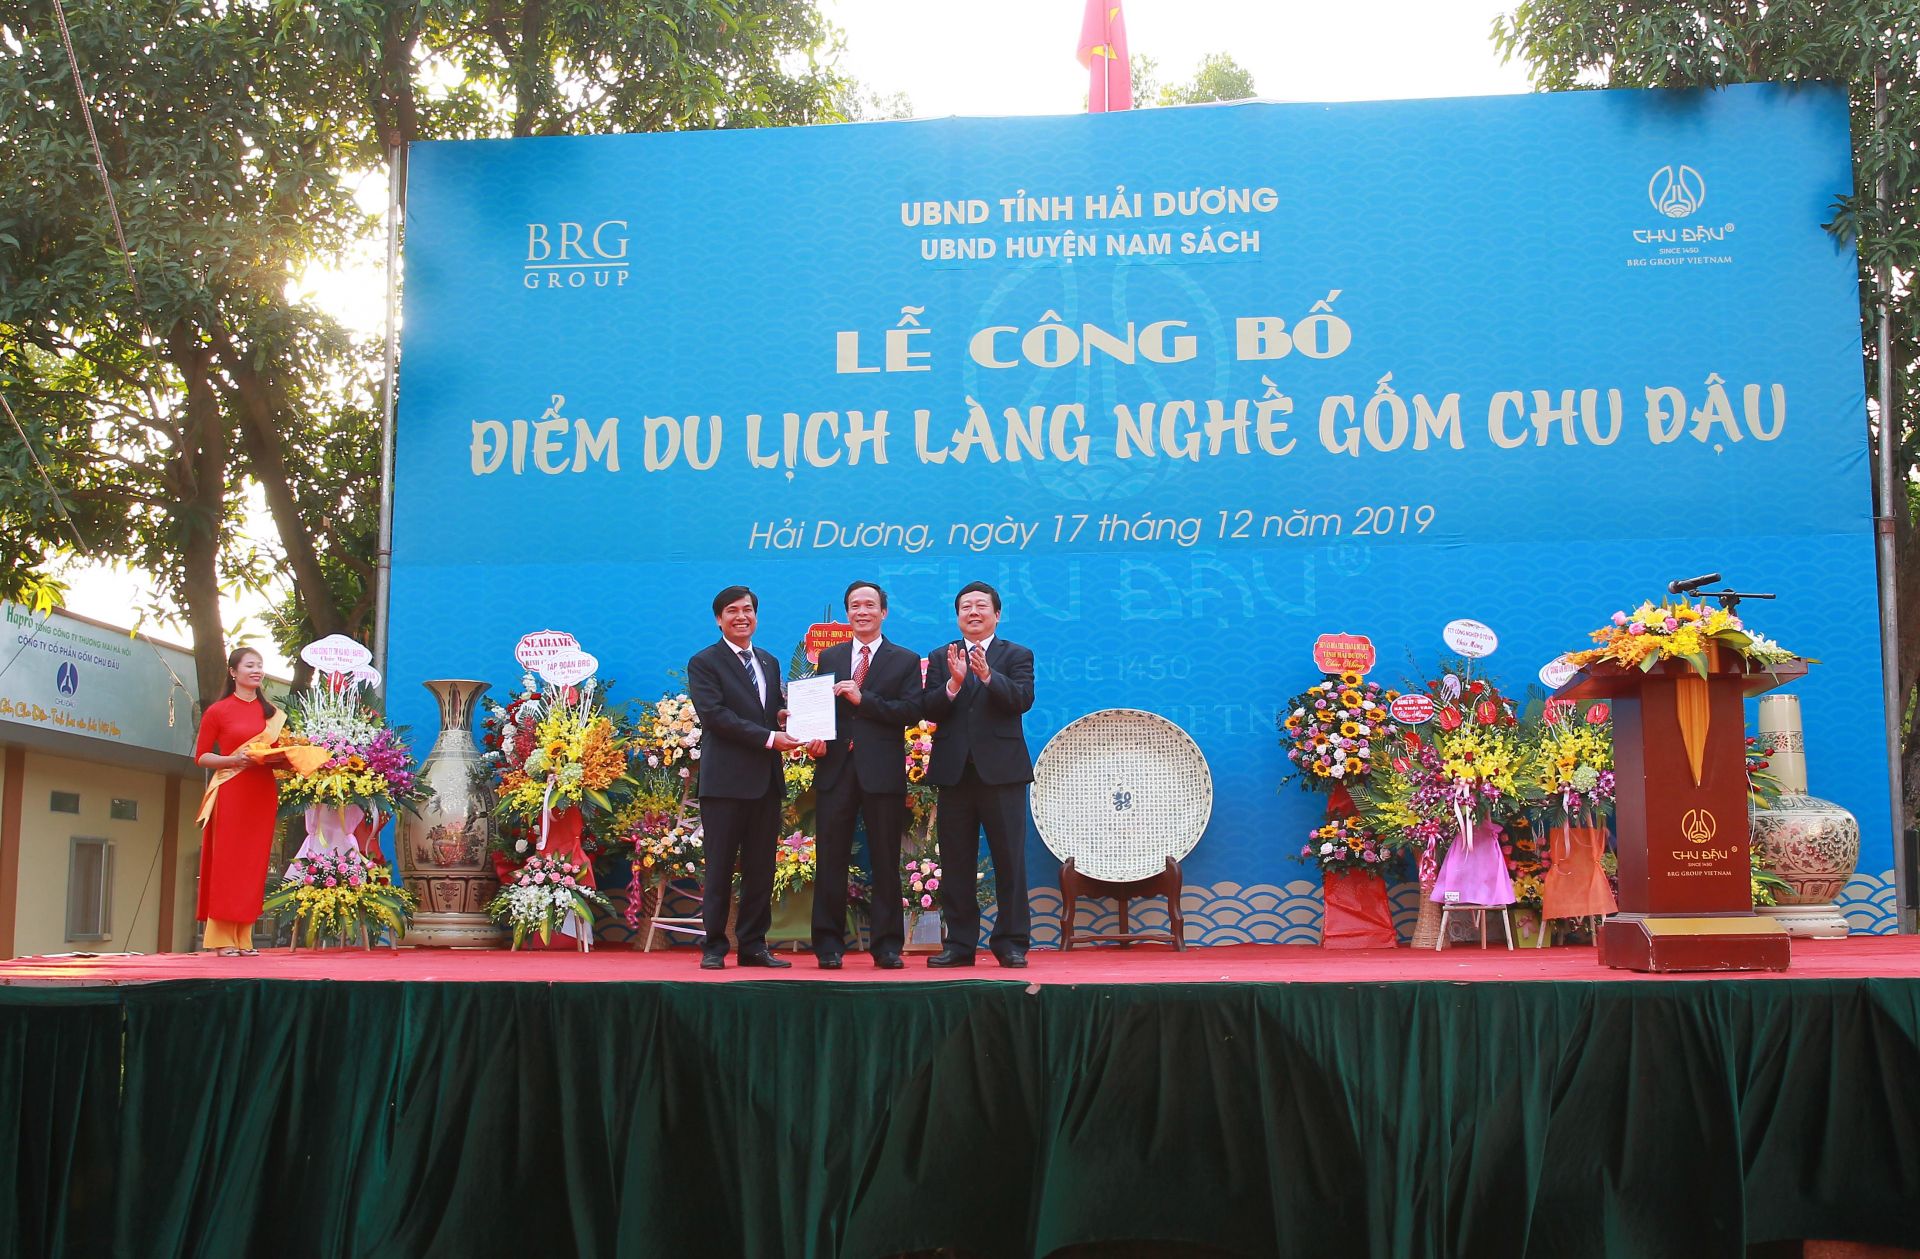 announcement ceremony for chu dau ceramic village tourist attraction